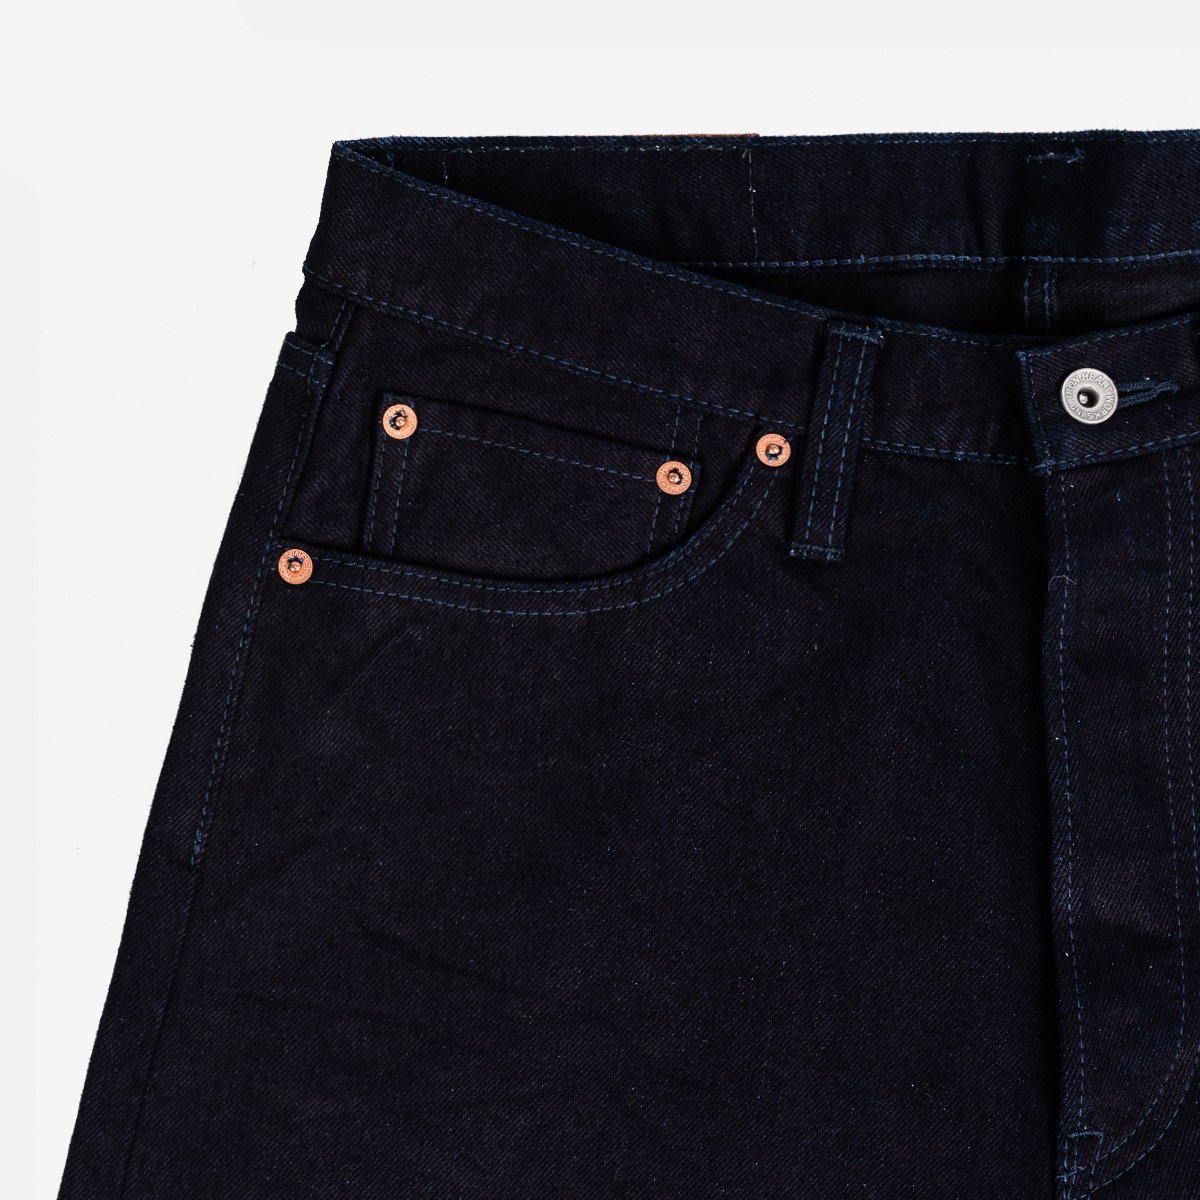 14oz Selvedge Medium/High Rise Tapered Cut Jeans - Indigo/Black